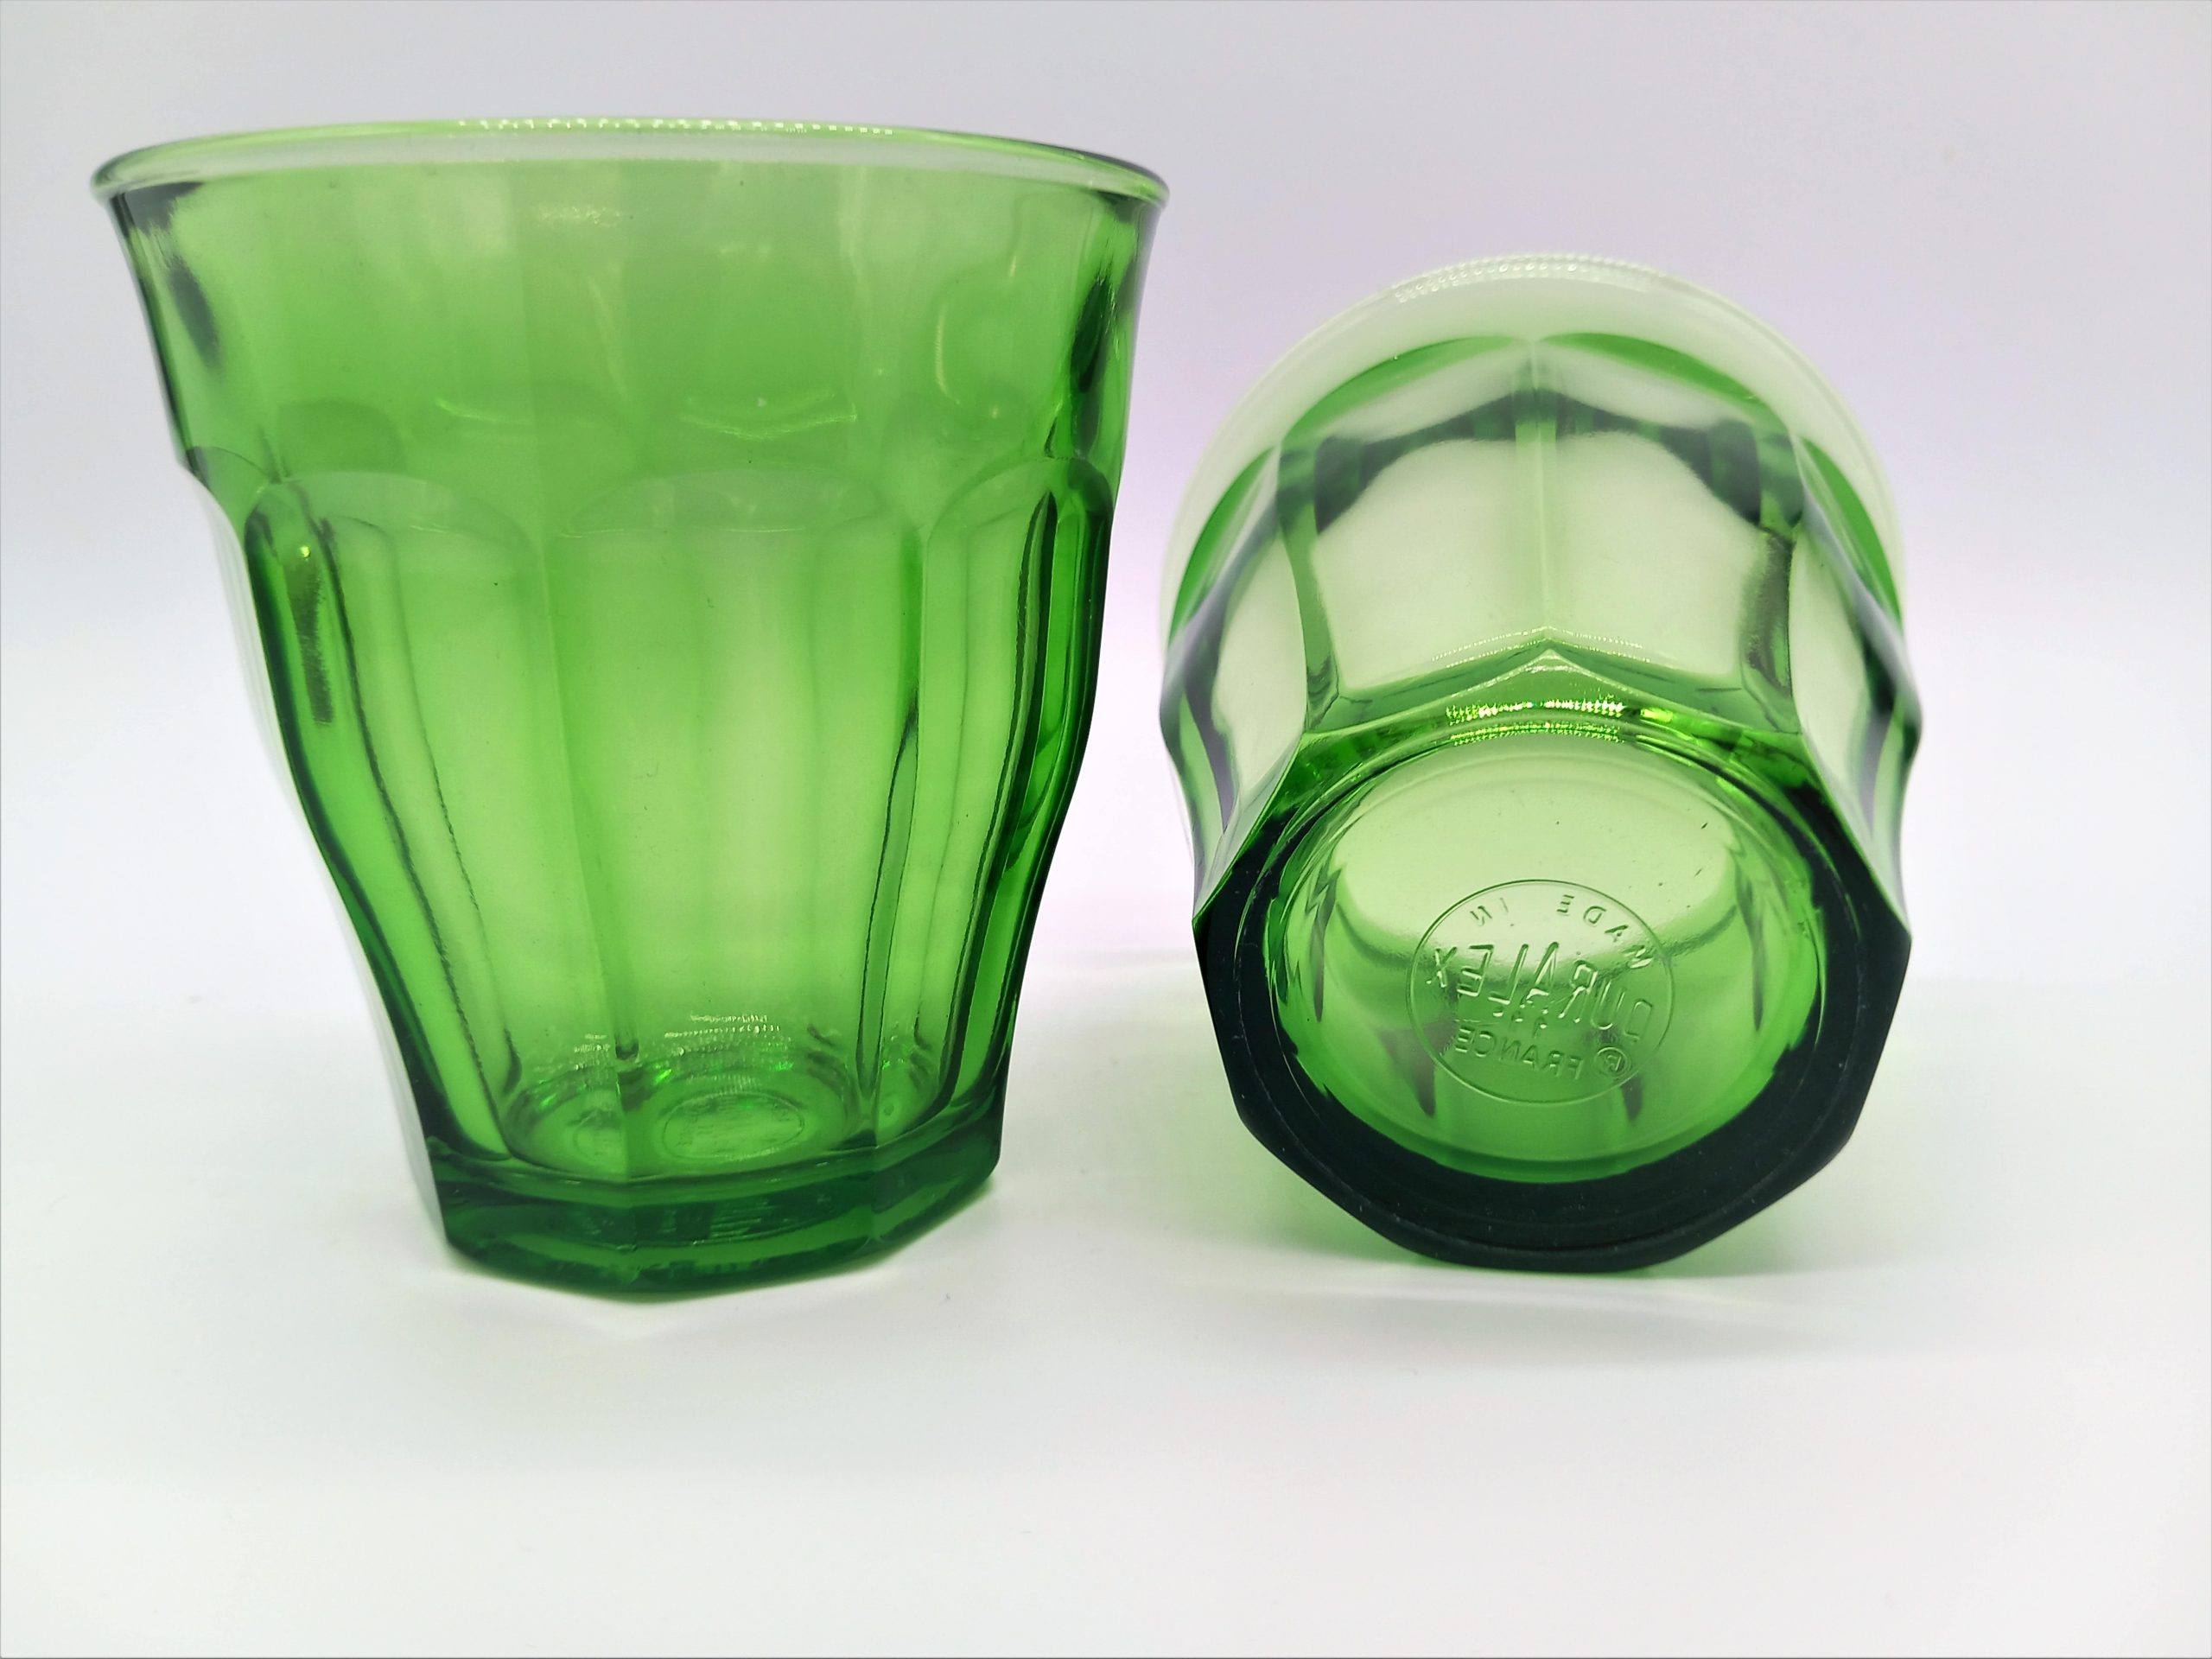 Duralex Picardie glazen, iconisch groen selectie, 25 cl